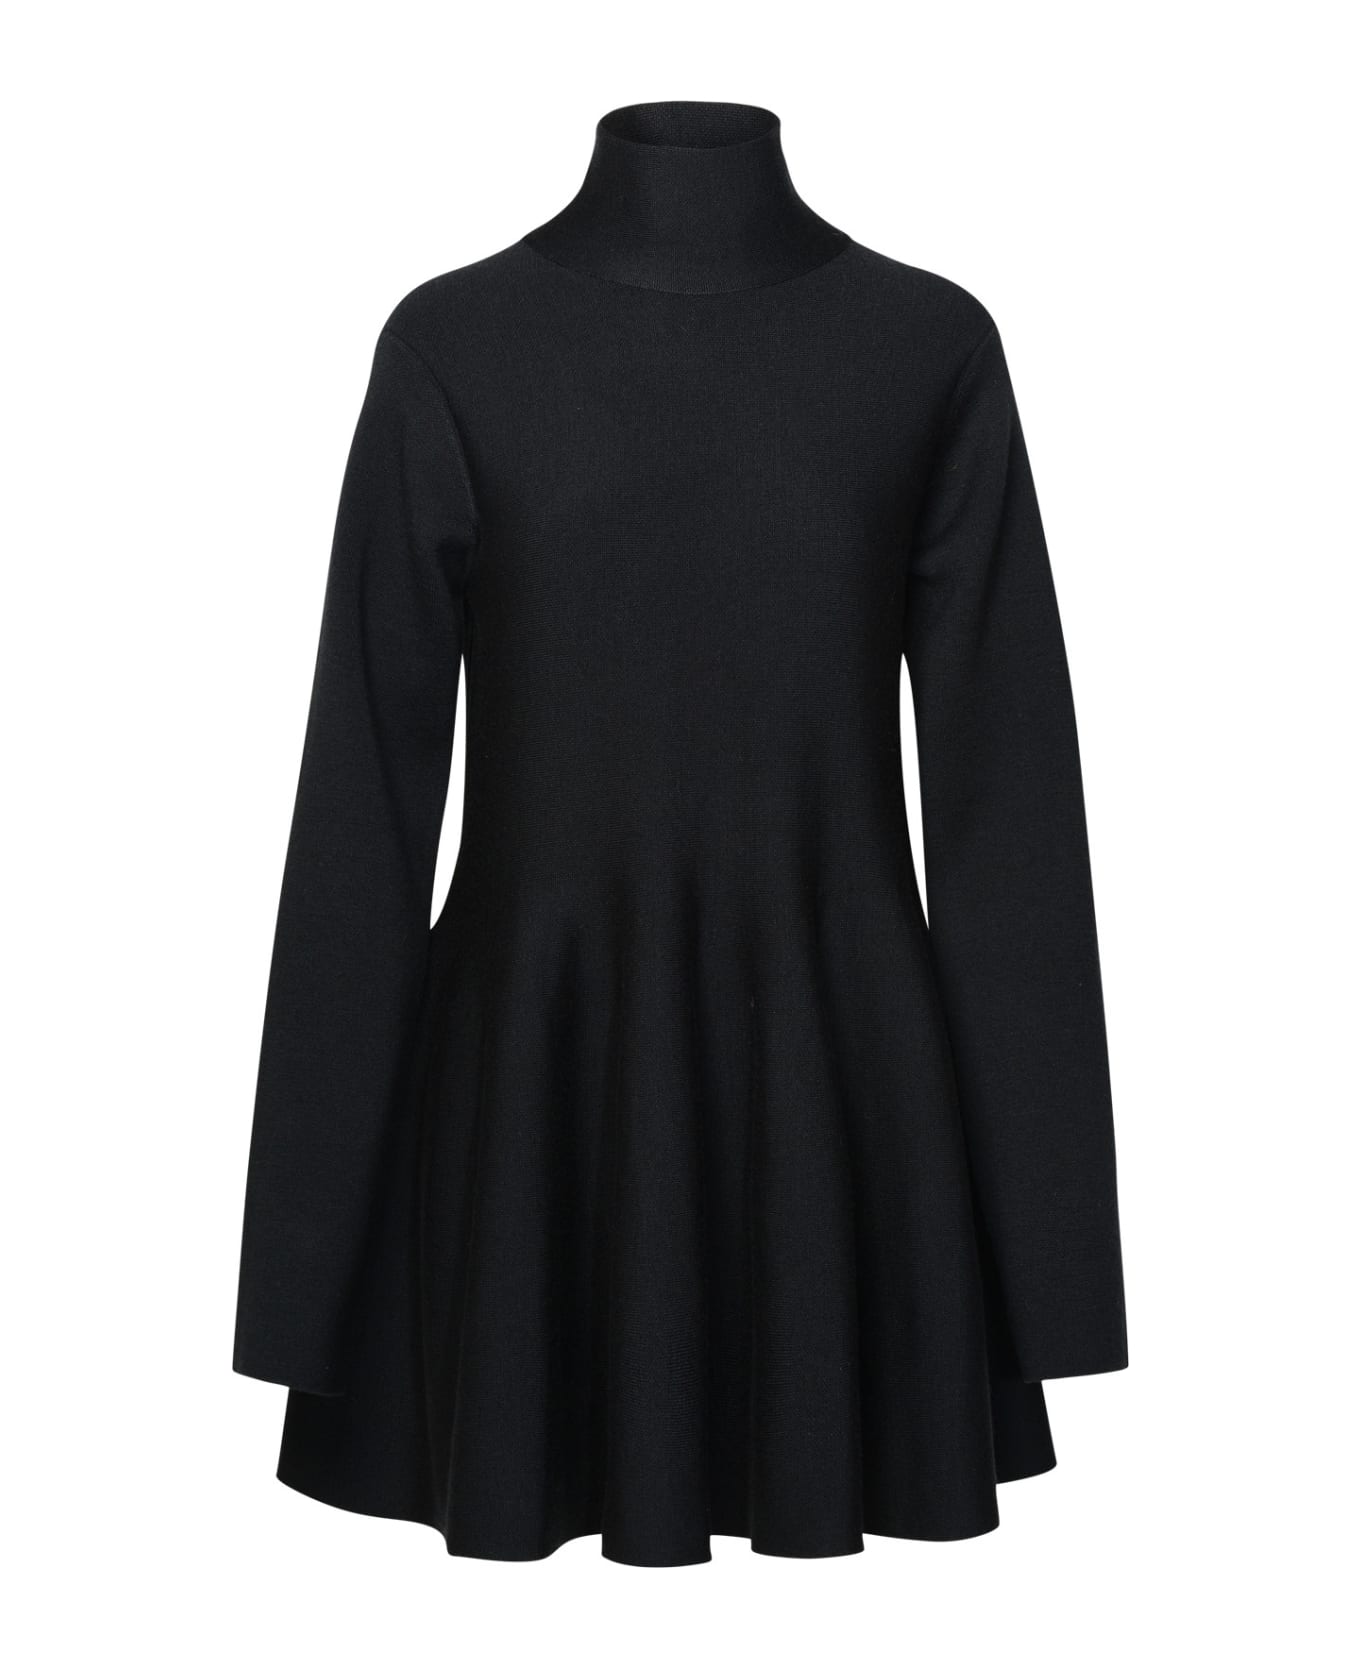 Khaite Black Wool Blend Dress - Black